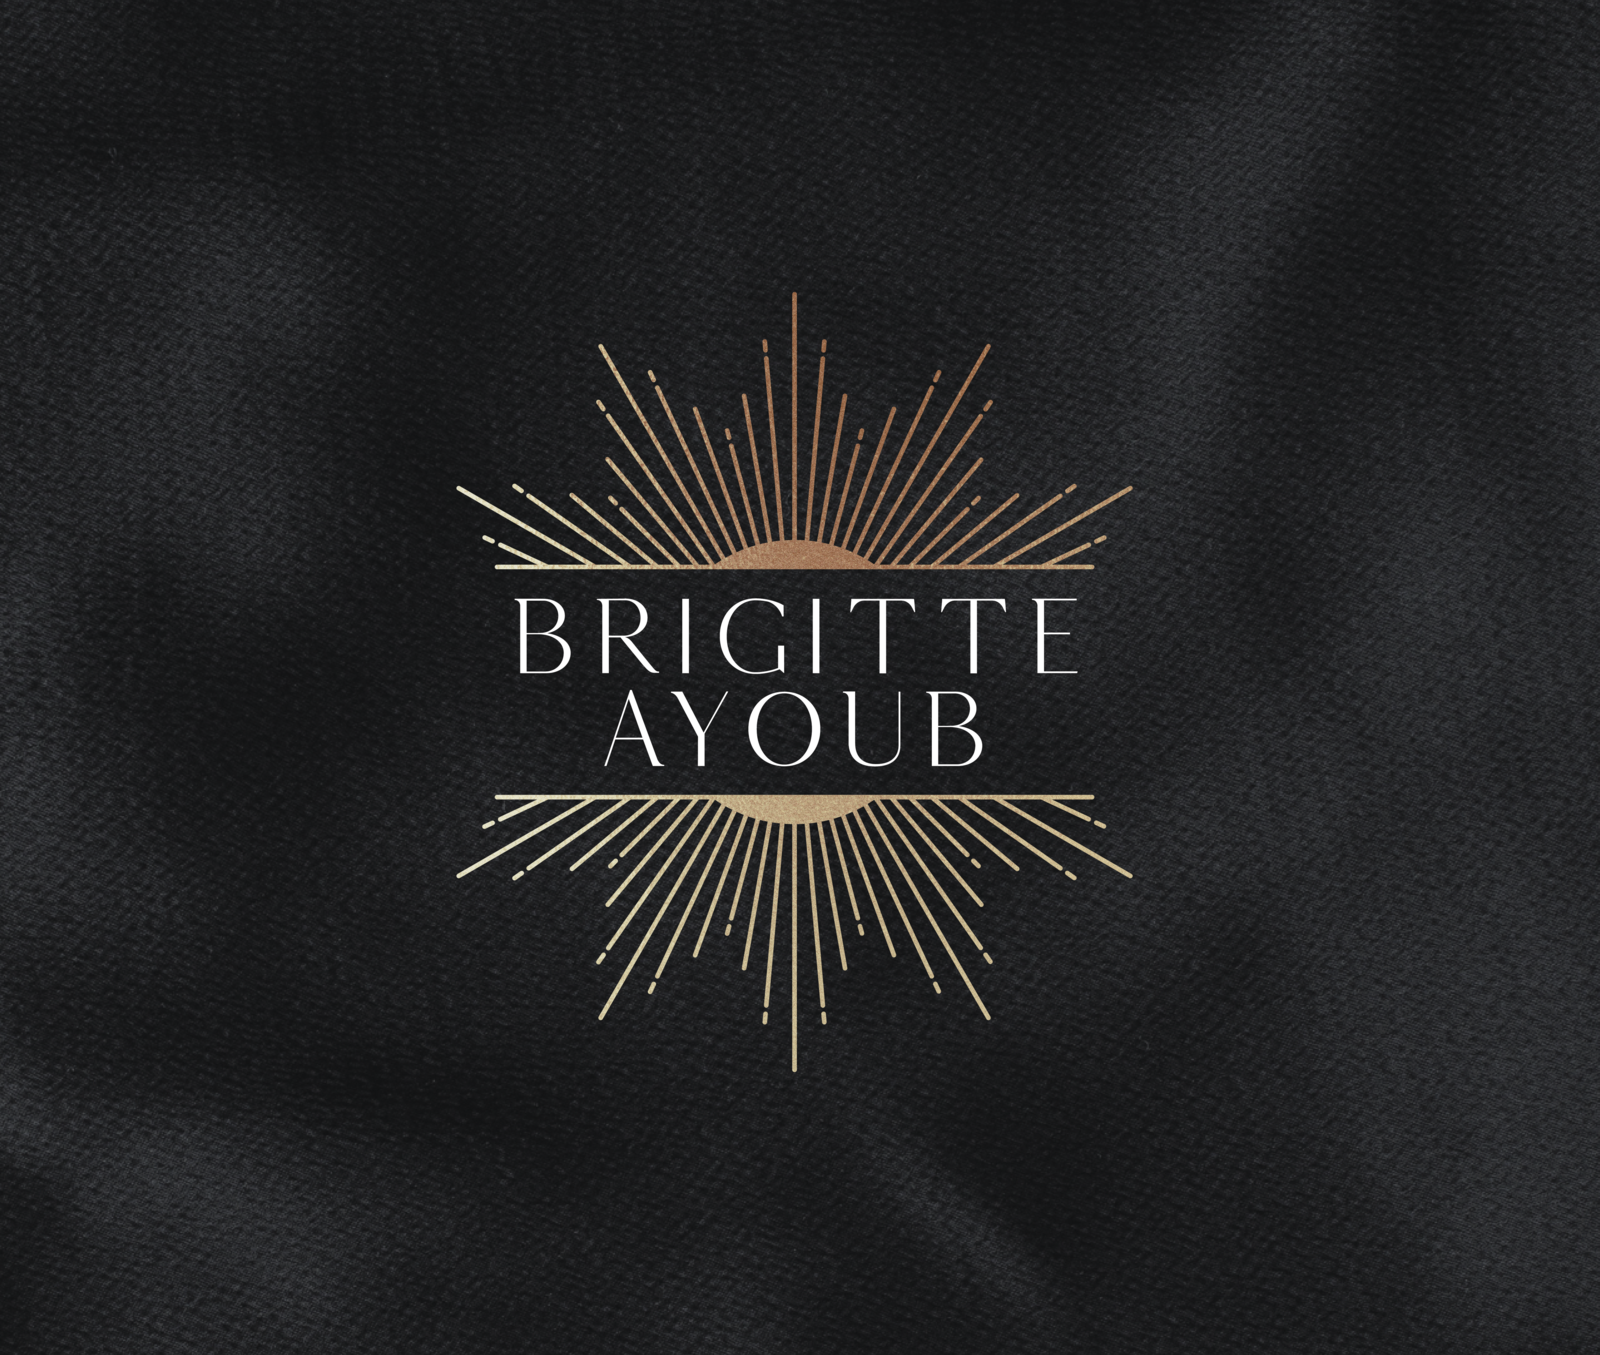 Sun burst logo with text "Brigitte Ayoub"